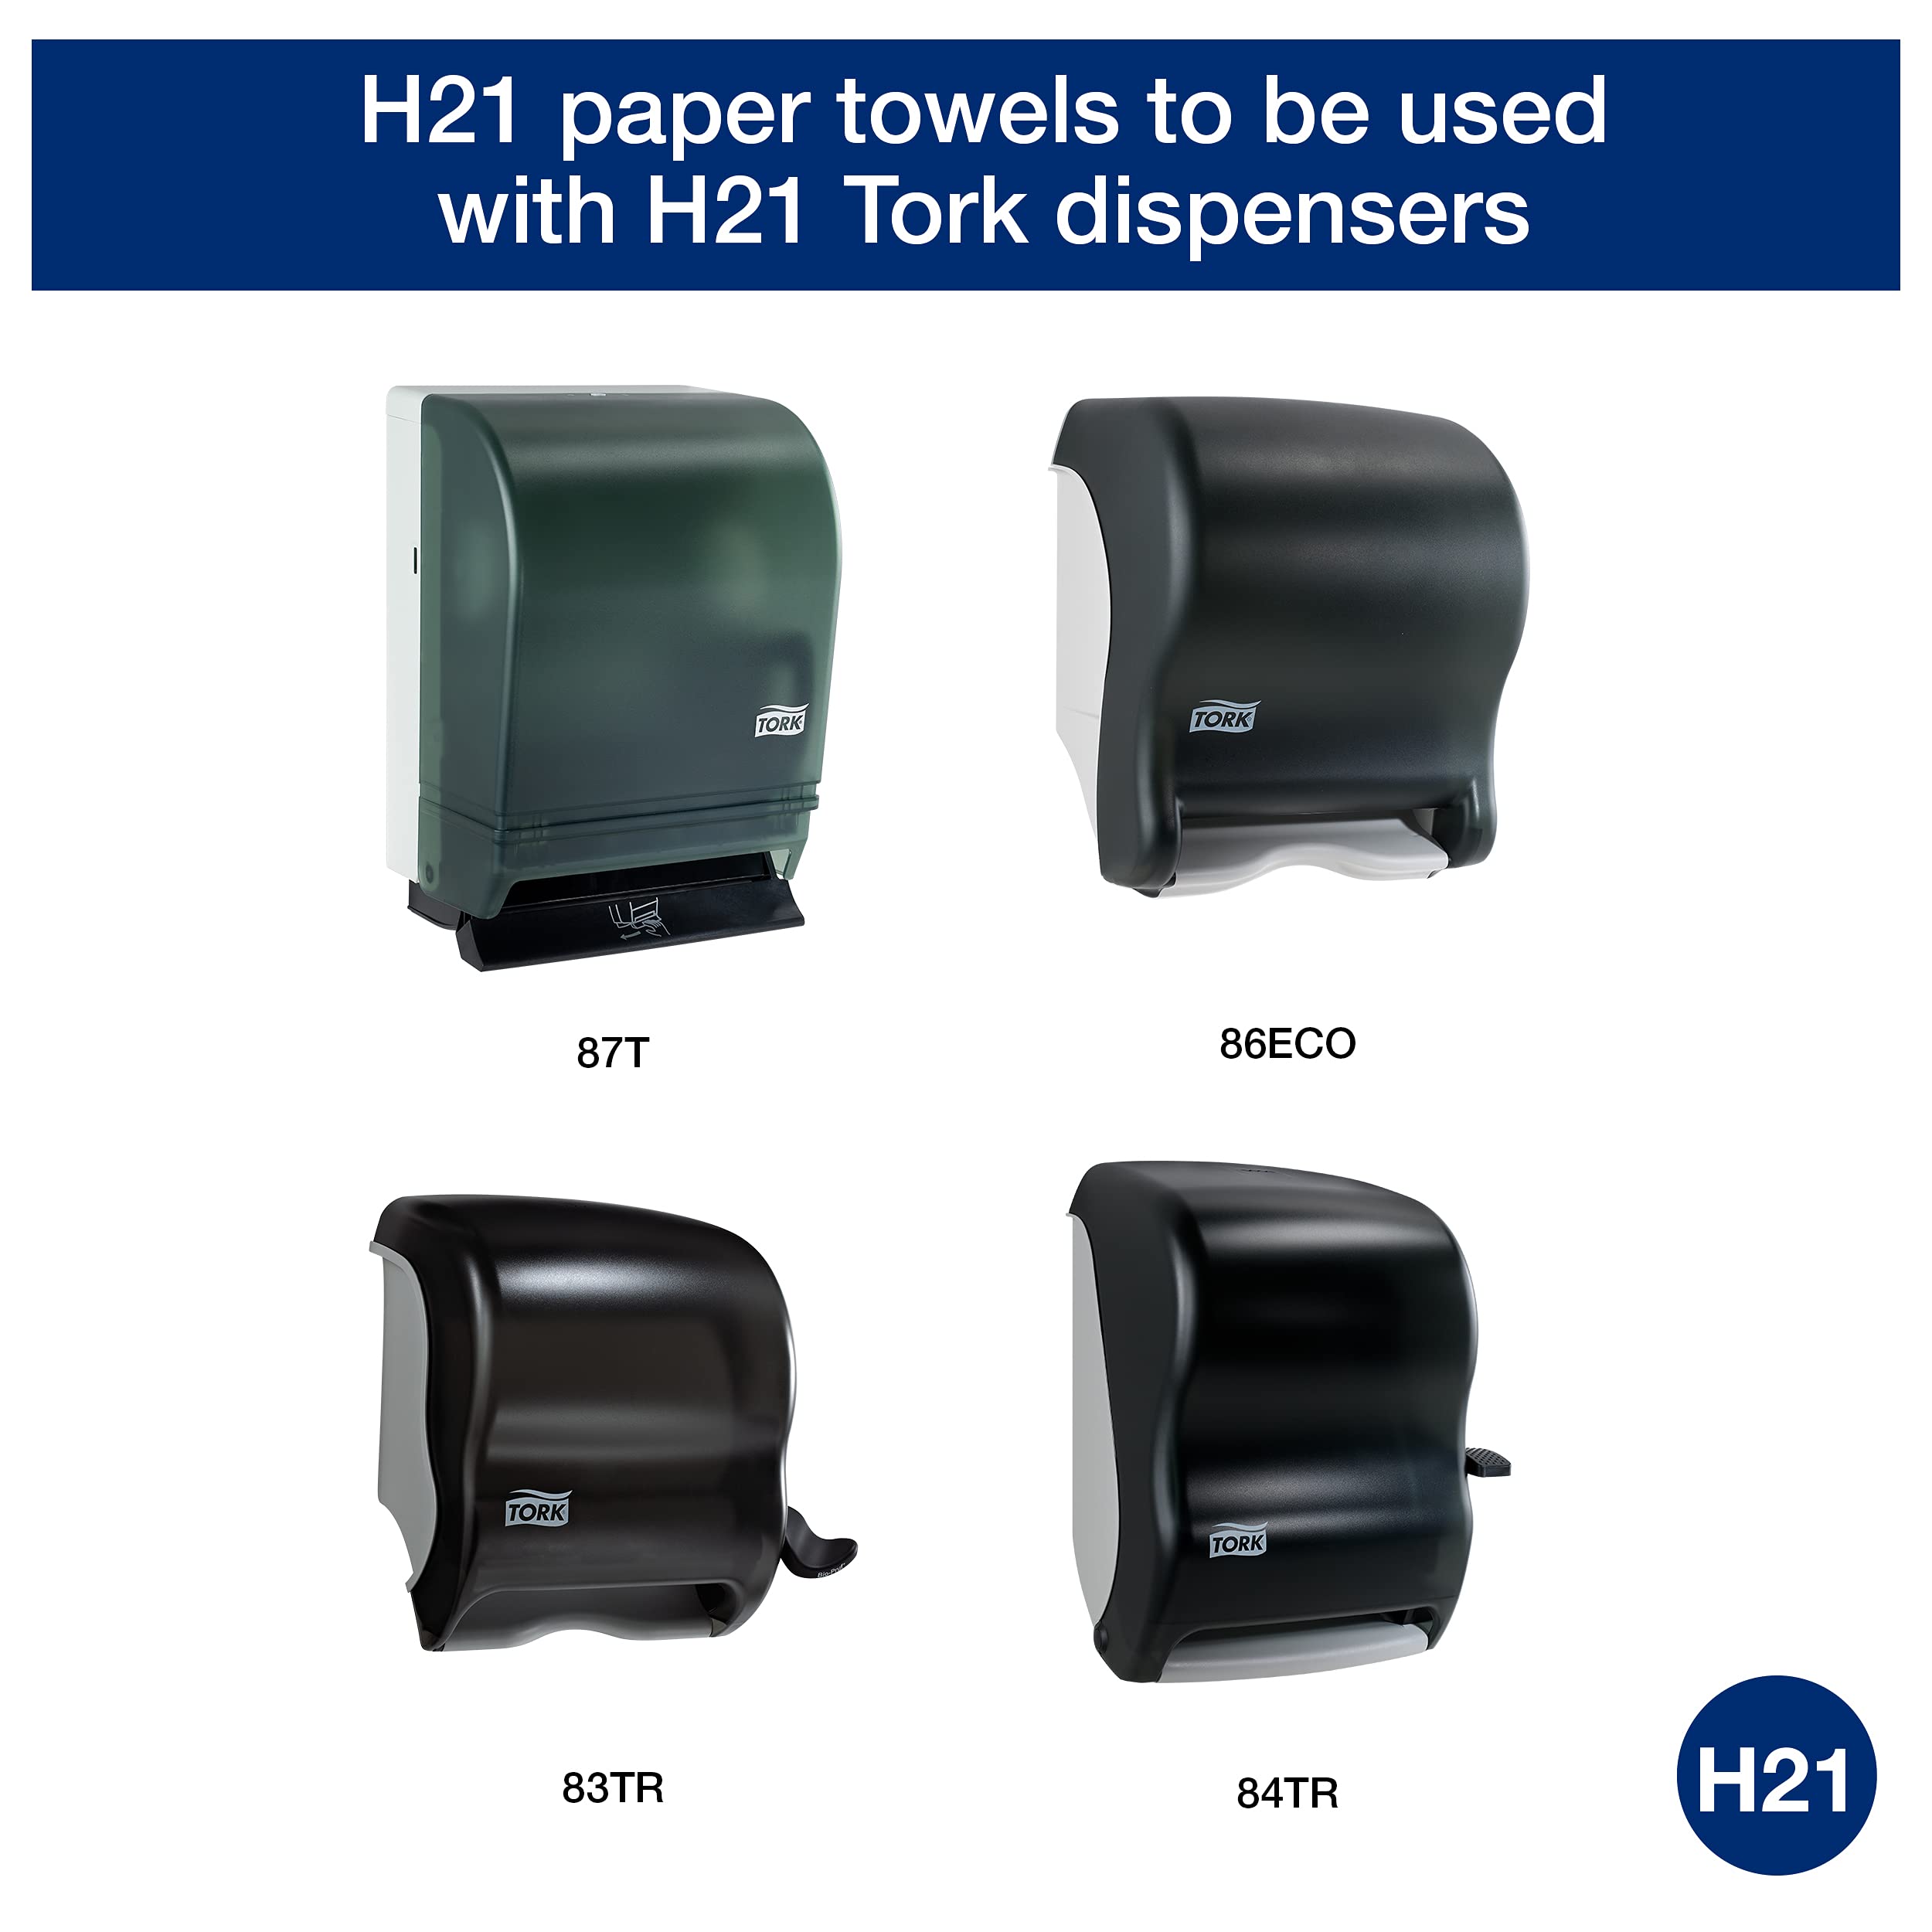 Tork Paper Hand Towel Roll Natural H21, Universal, 100% Recycled Fiber, 6 Rolls x 800 ft, RK8002